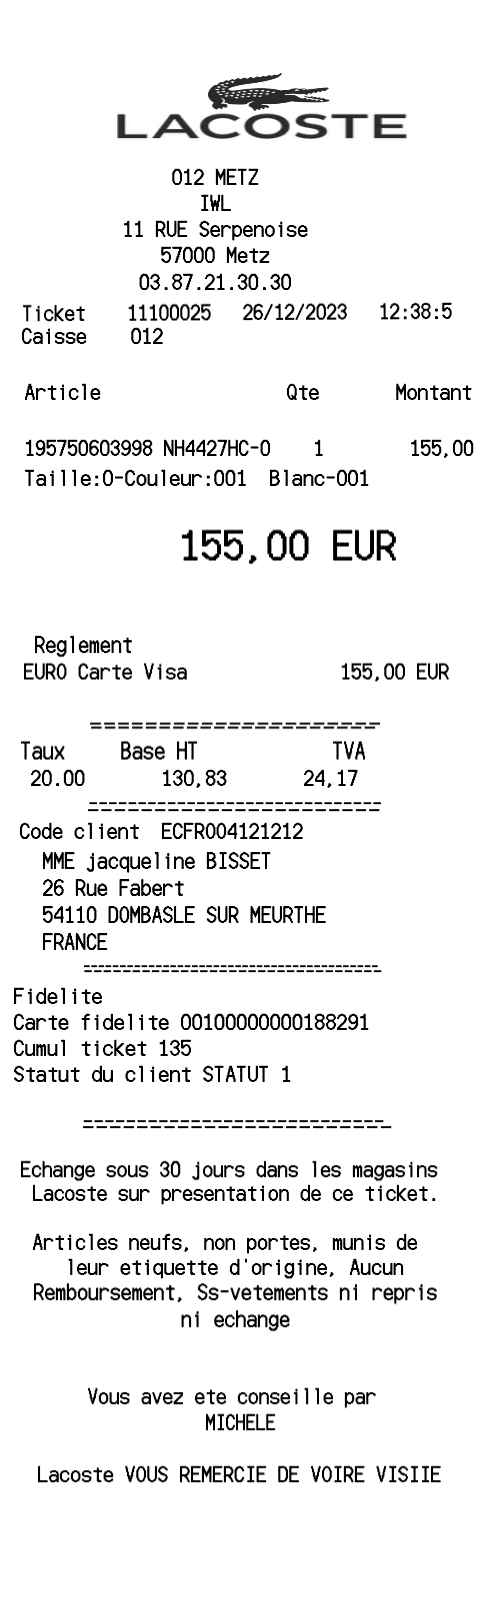 Lacoste receipt template image